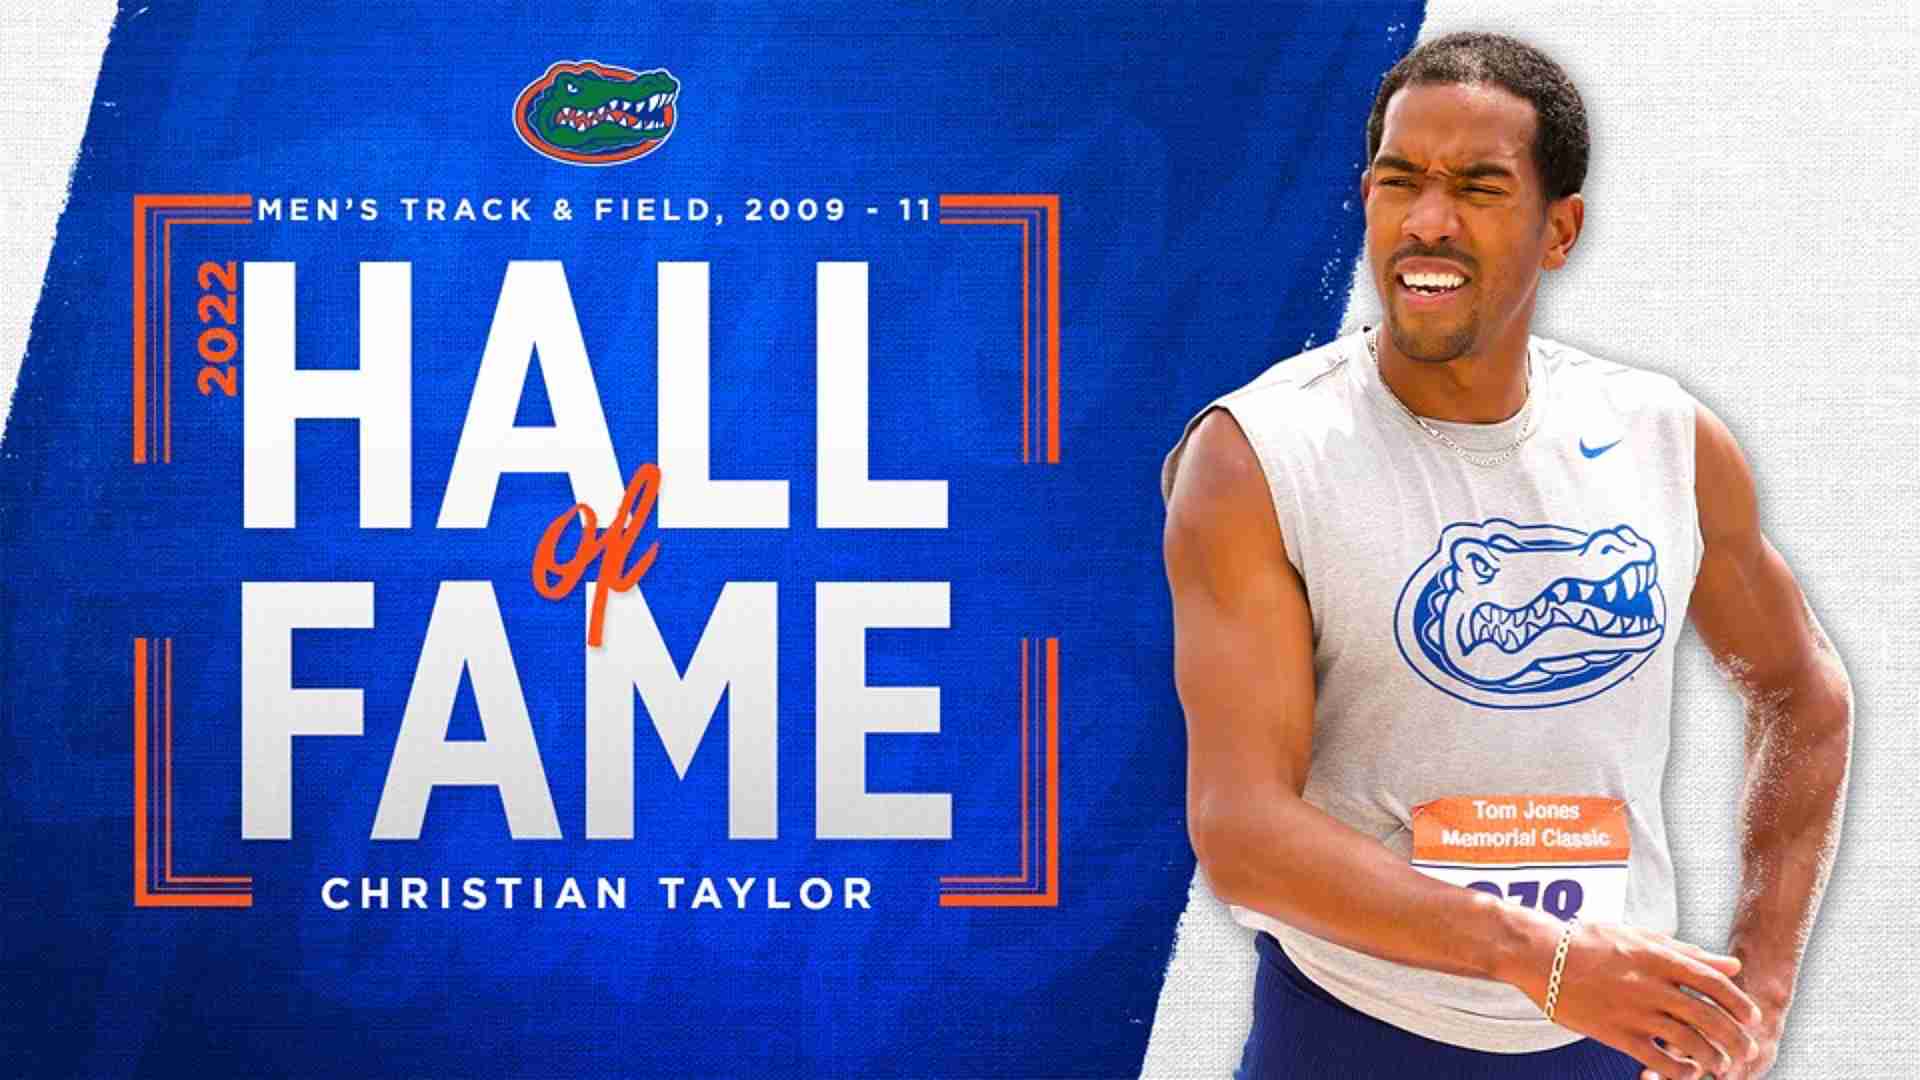 Christian-Taylor-of-Florida-Gators